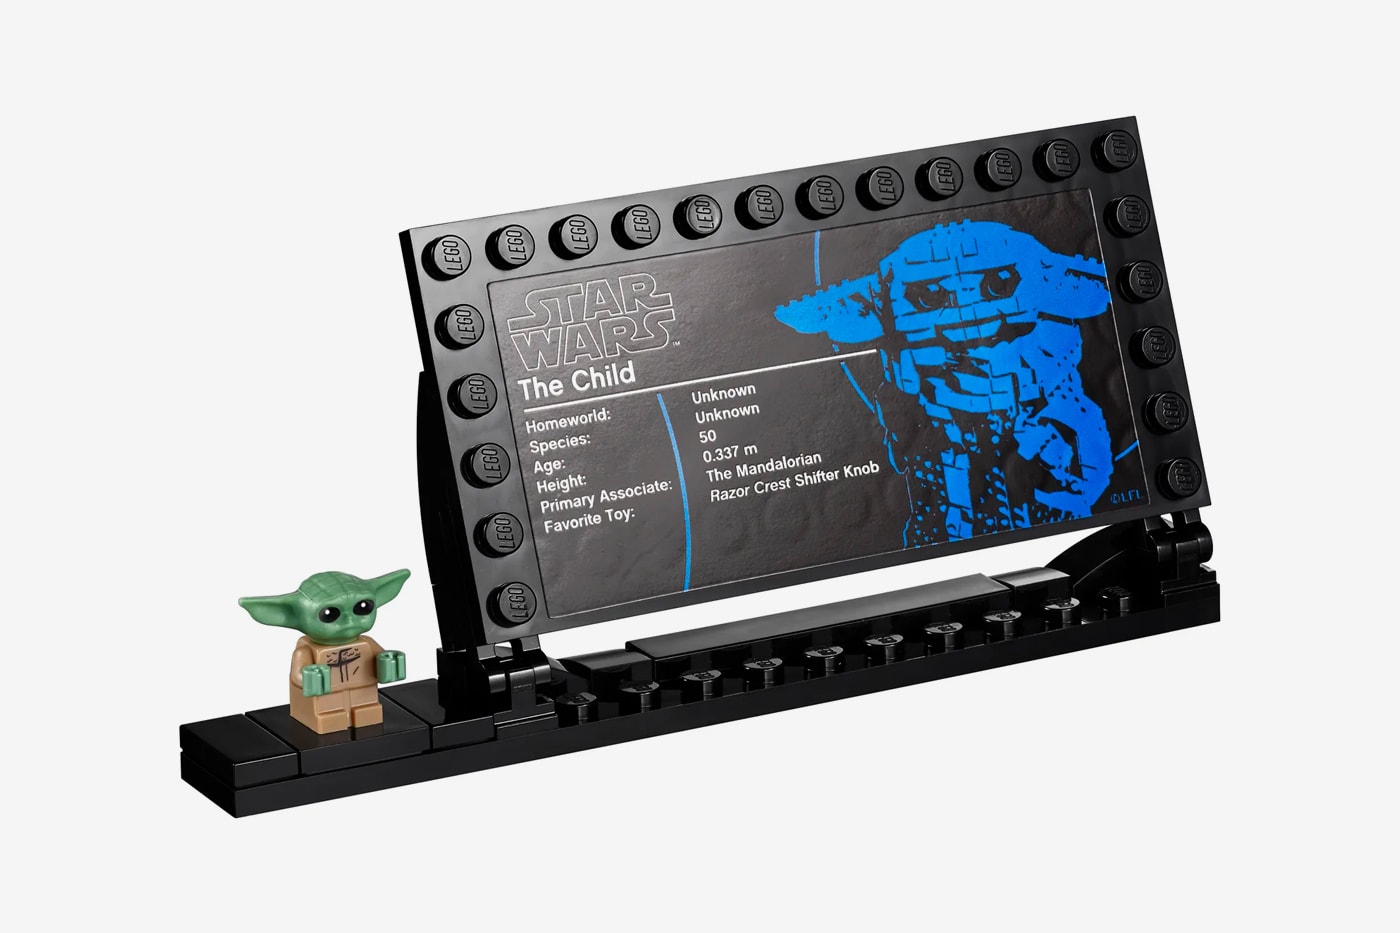 Lego Star Wars The Mandalorian The Child 75318 Release Yoda Star Wars Lucafilms toys figures bricks lightsabers Tv series season 2 